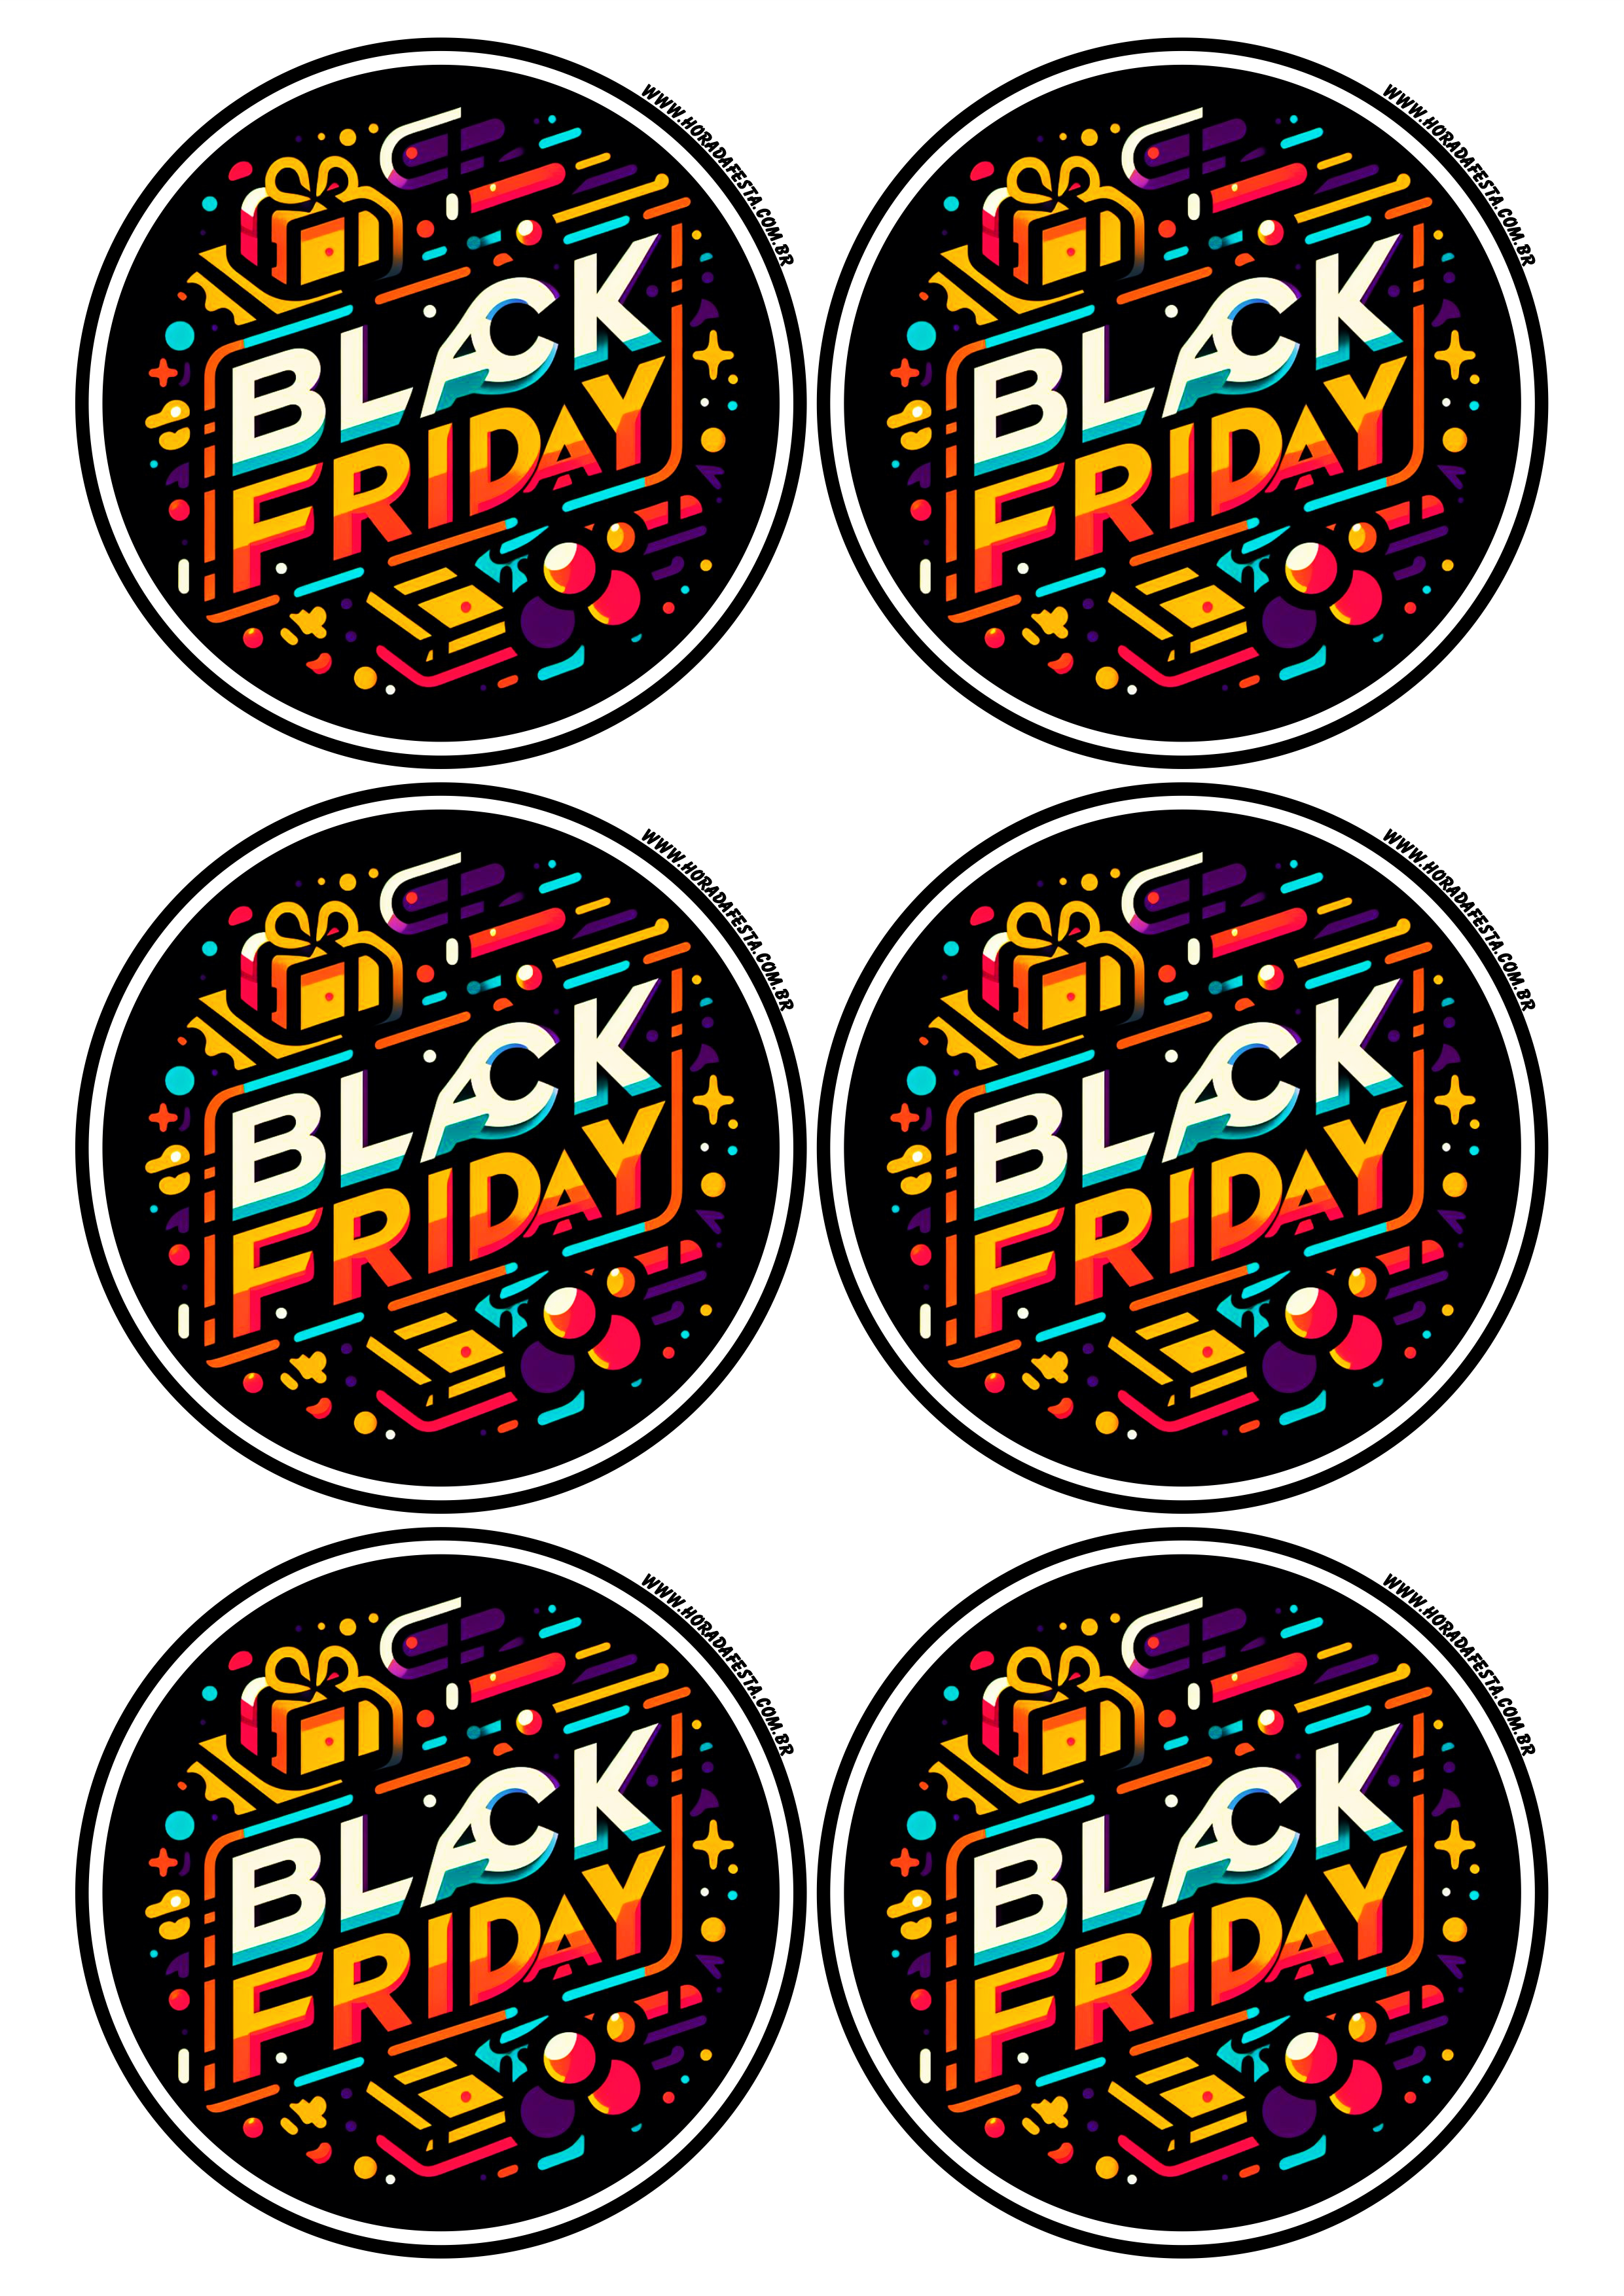 Black Friday adesivo redondo tag sticker artes gráficas 6 imagens png